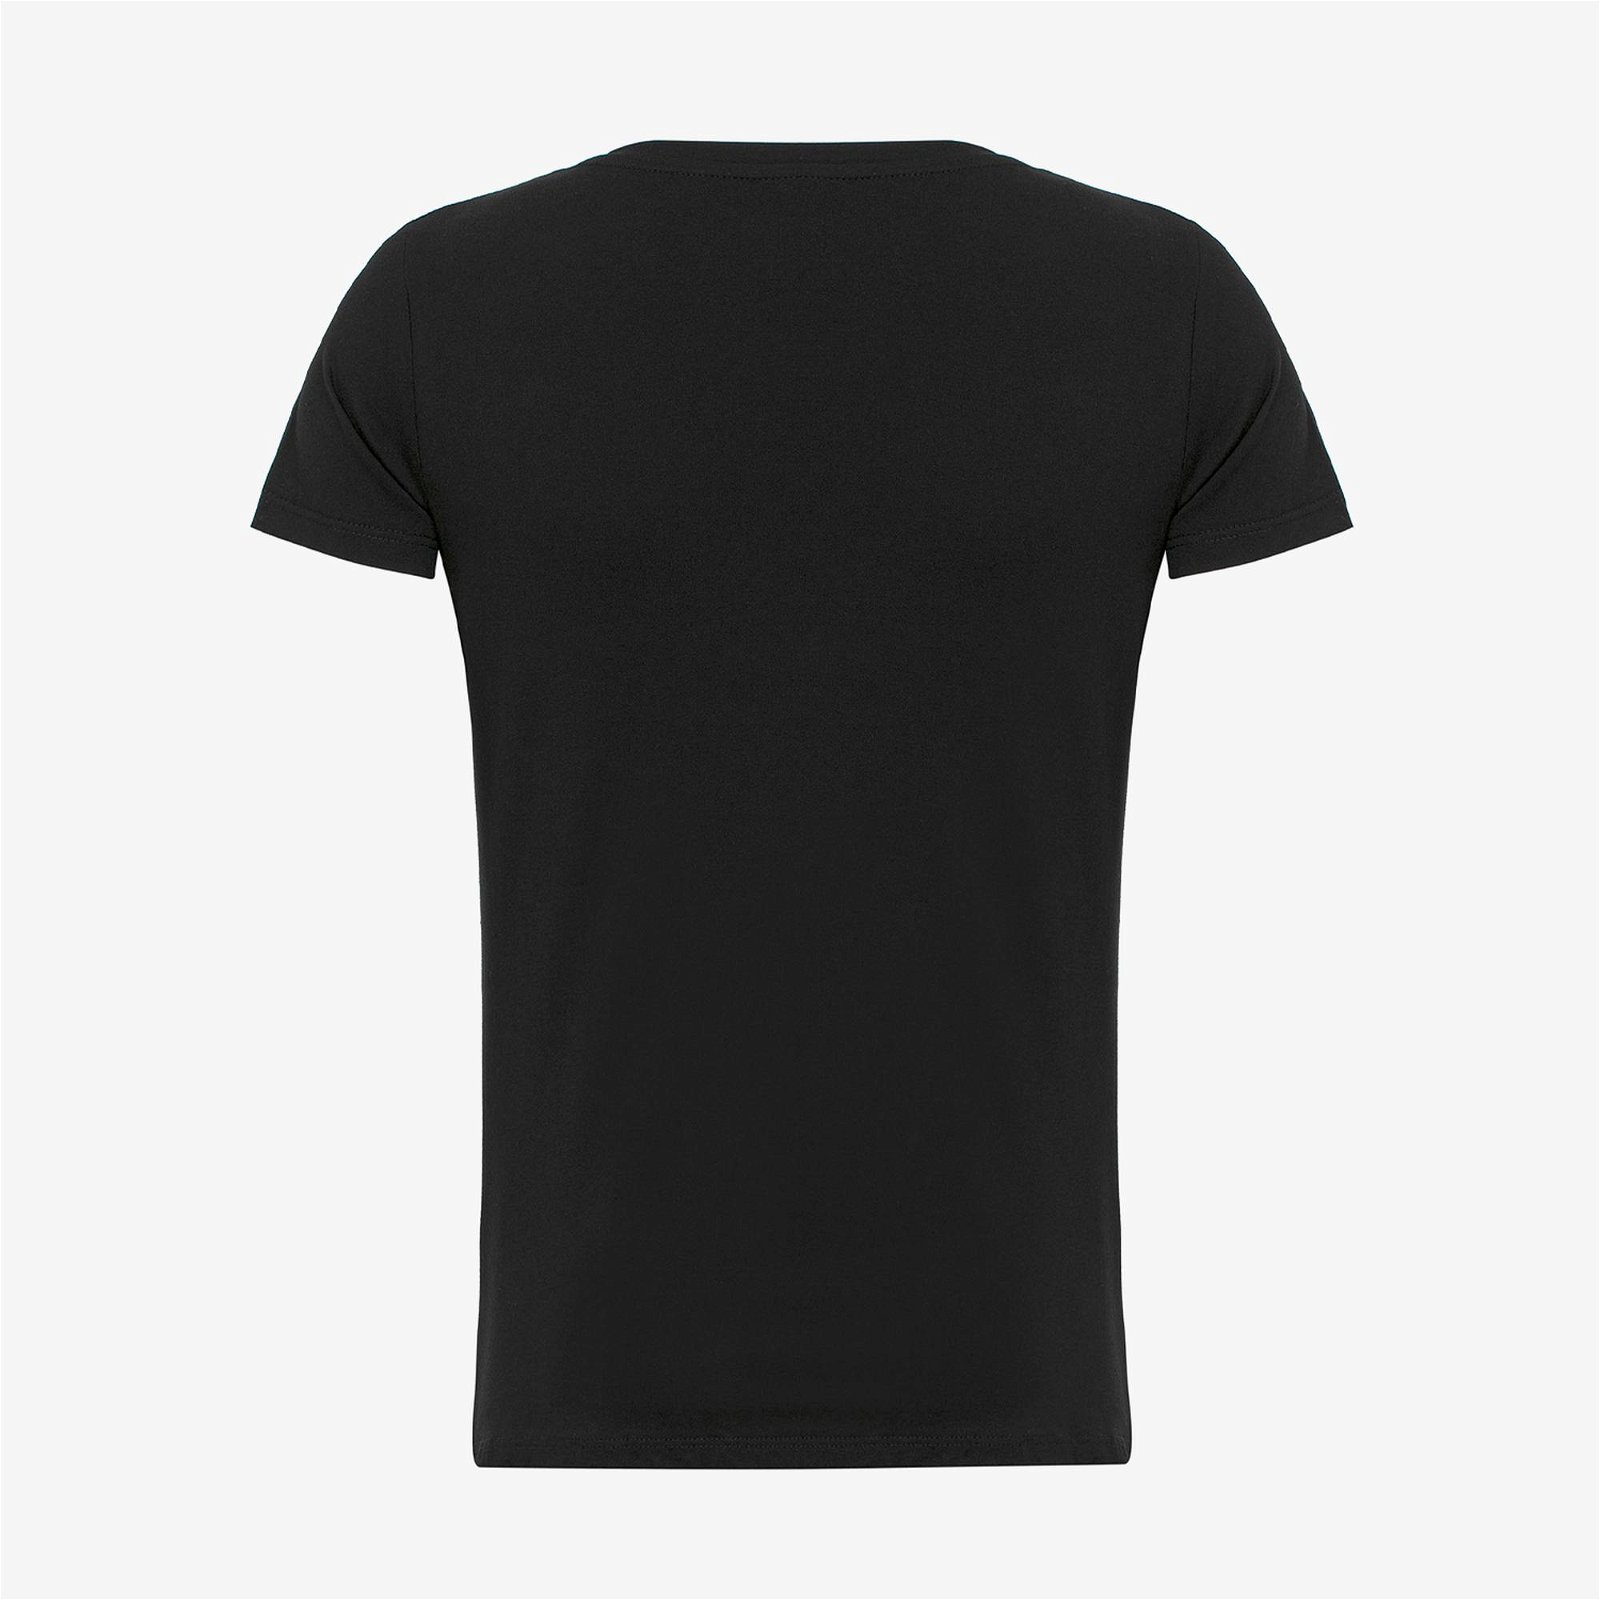 MERRELL Motto Kadın Siyah T-Shirt